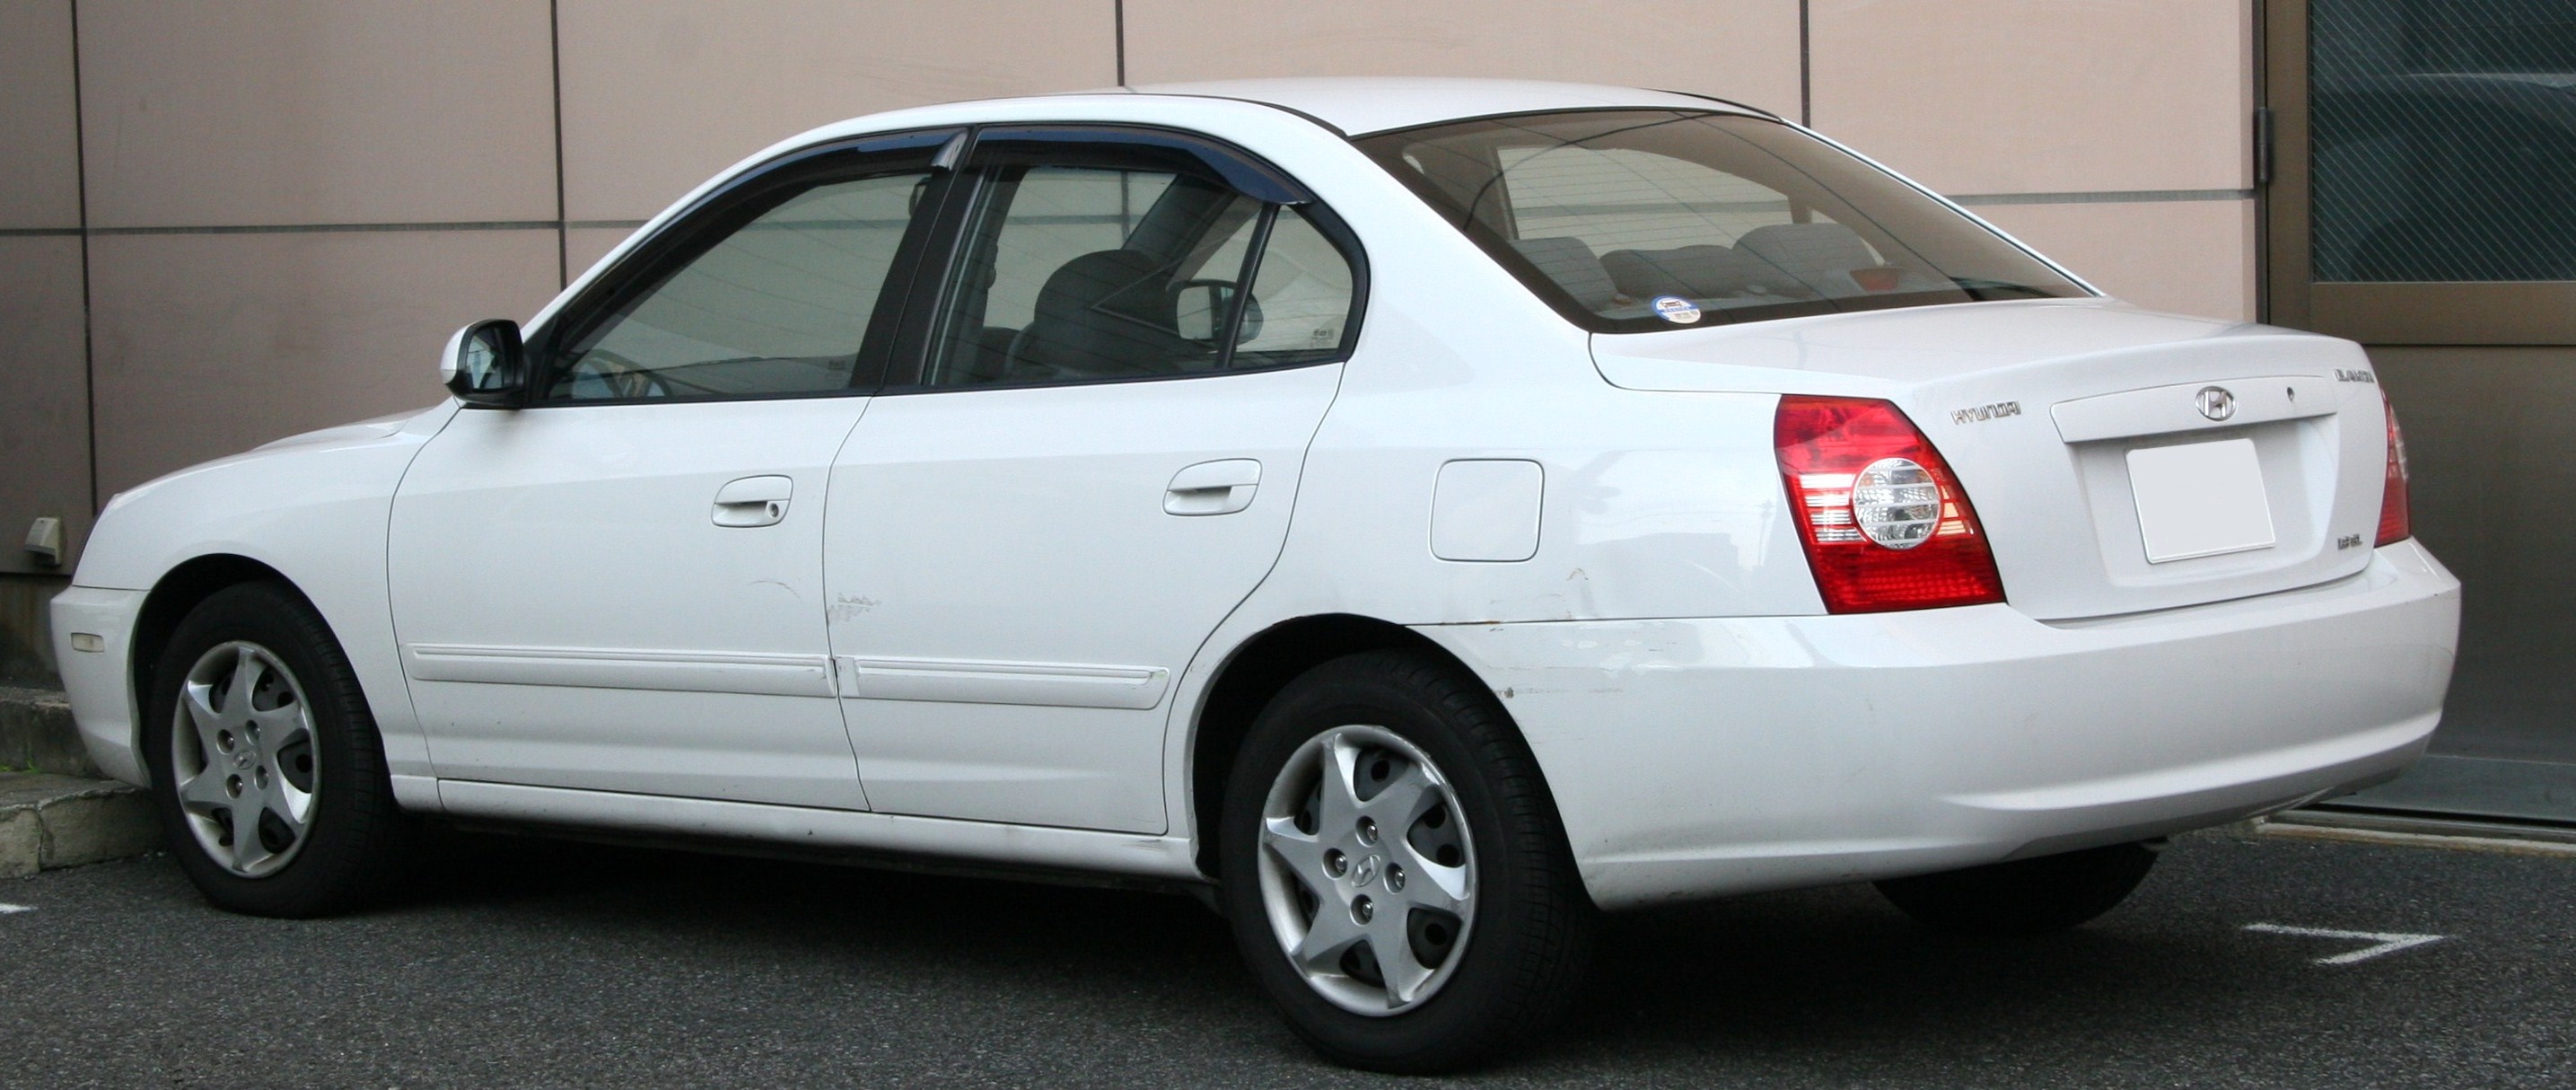 File:2003 Hyundai Elantra 1.8GL rear.jpg - Wikipedia